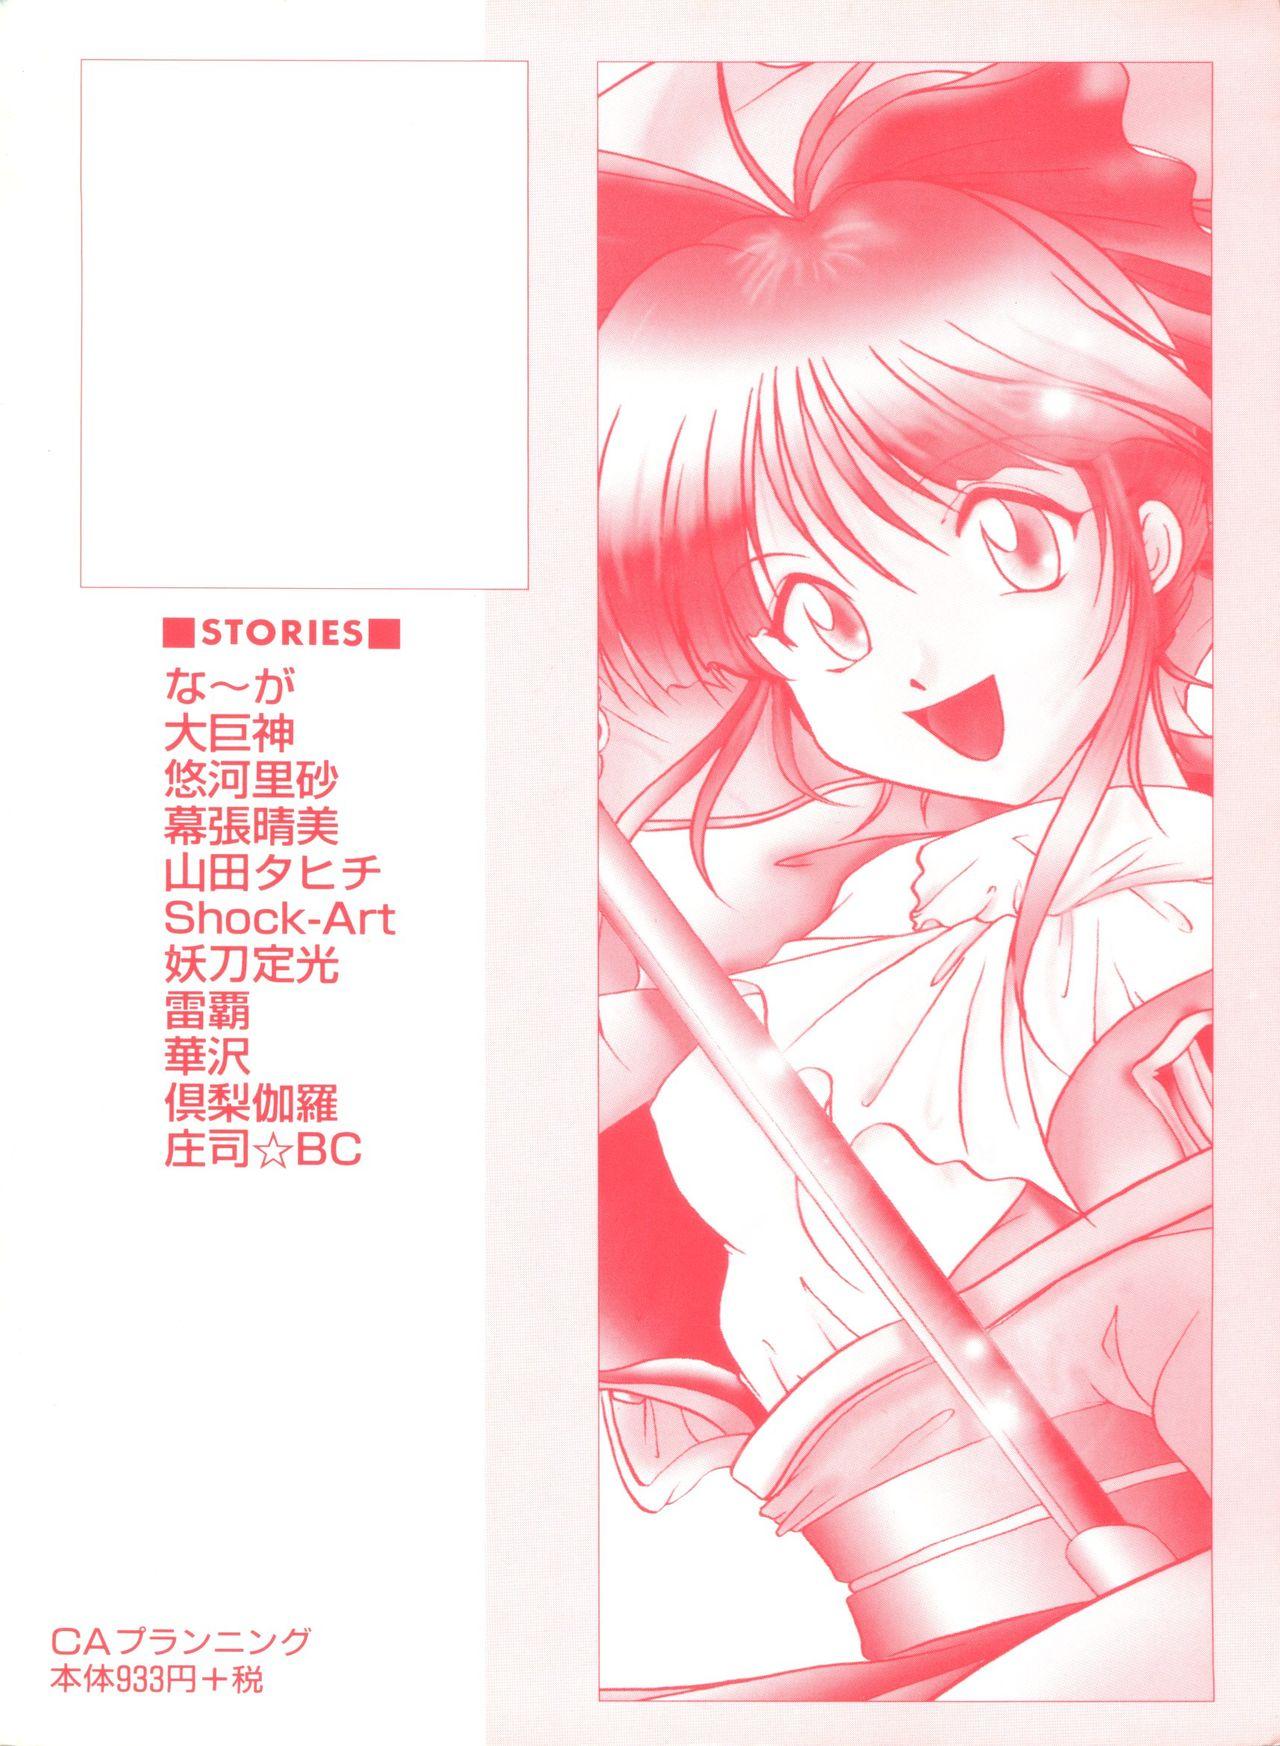 Dirty Talk Girl's Parade Scene 4 - Sakura taisen Martian successor nadesico Slayers Yu yu hakusho Alt - Page 180